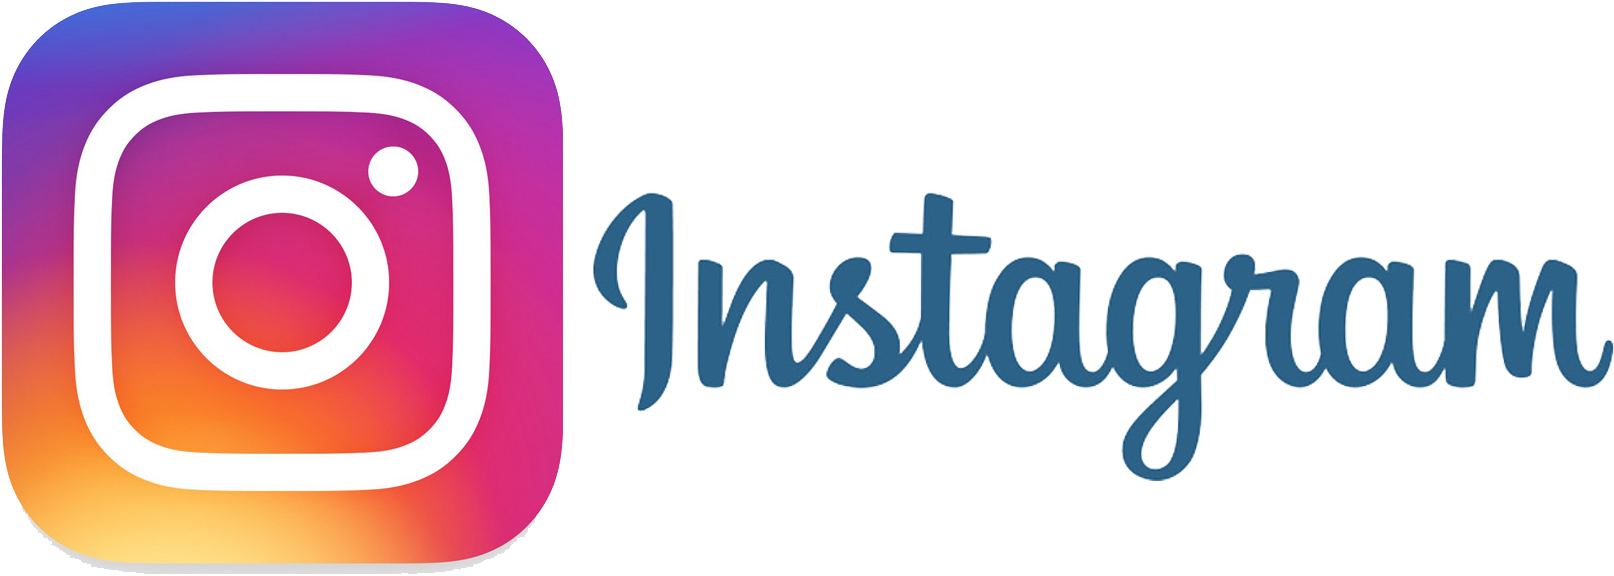 Instagram logo followed by its name written in cursive letters